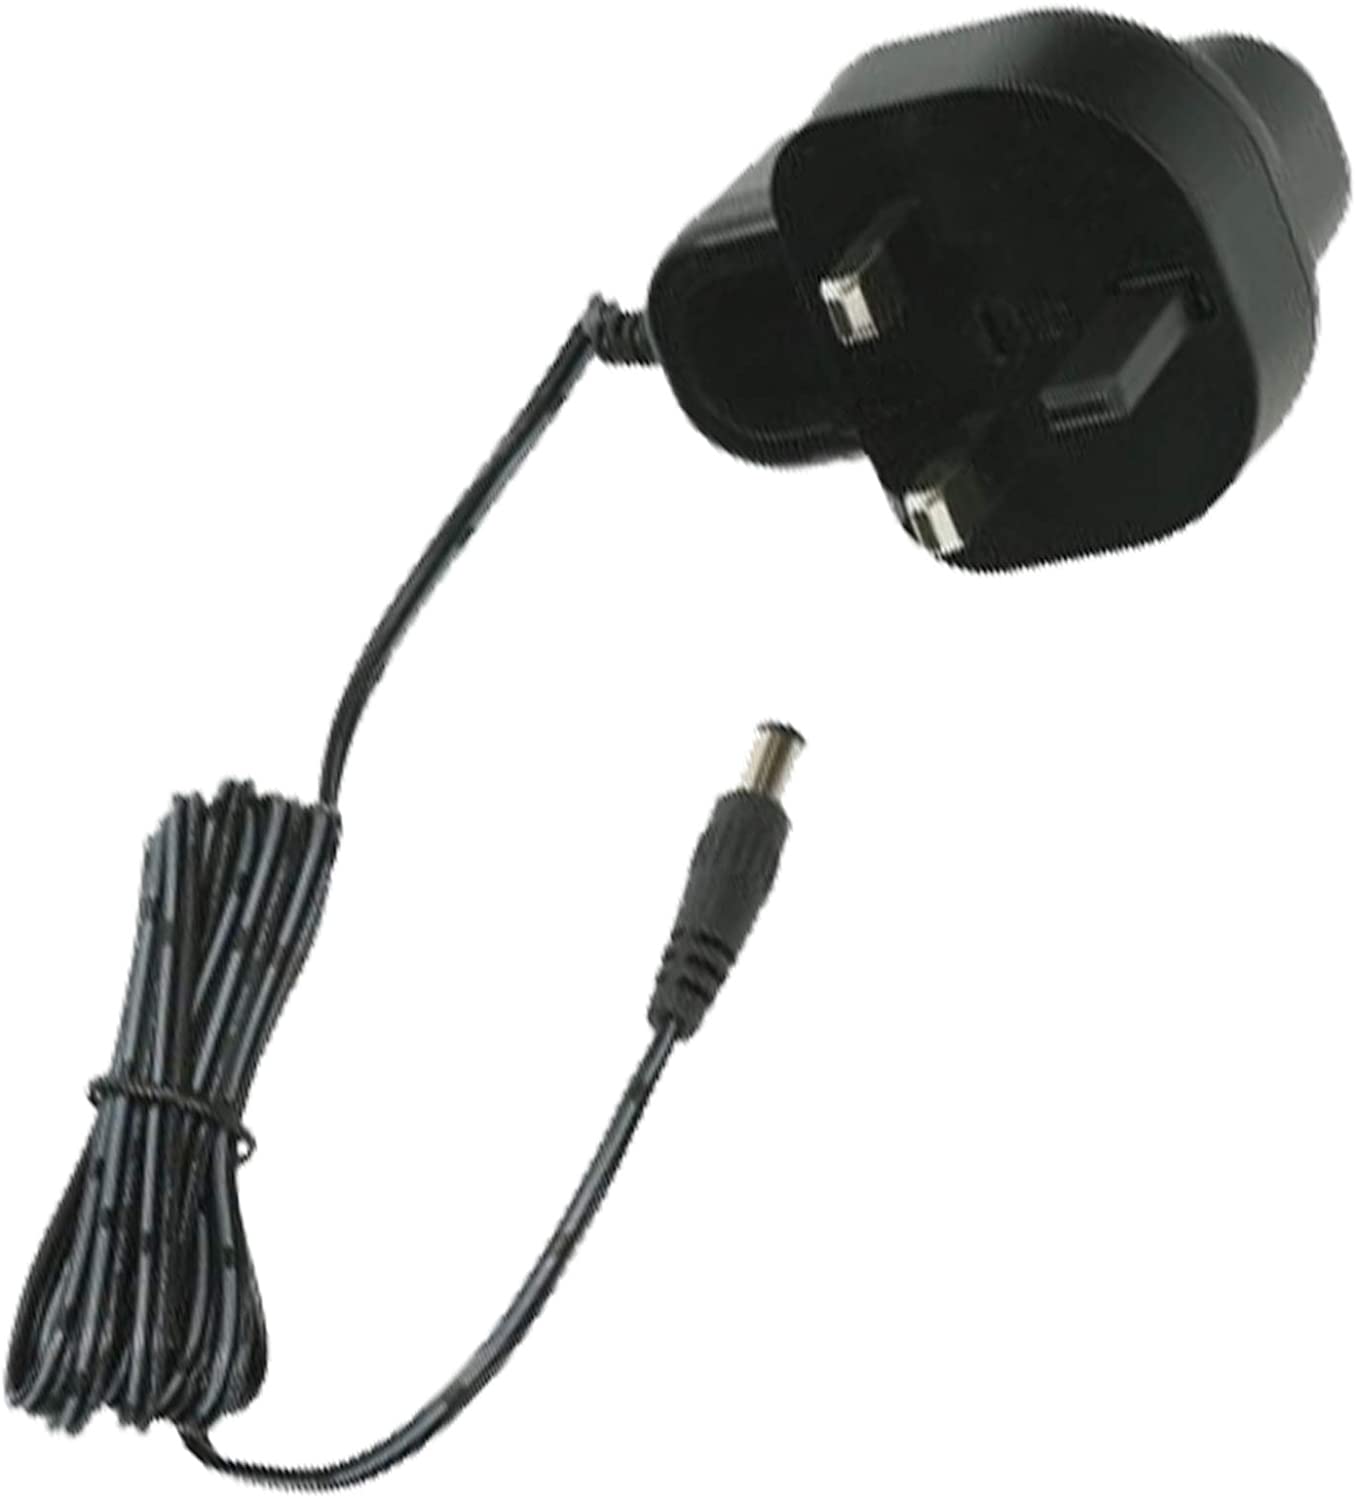 Bosch Battery Charger Cable UK Plug for Cordless Drill Driver PSR 10.8 LI LI-2